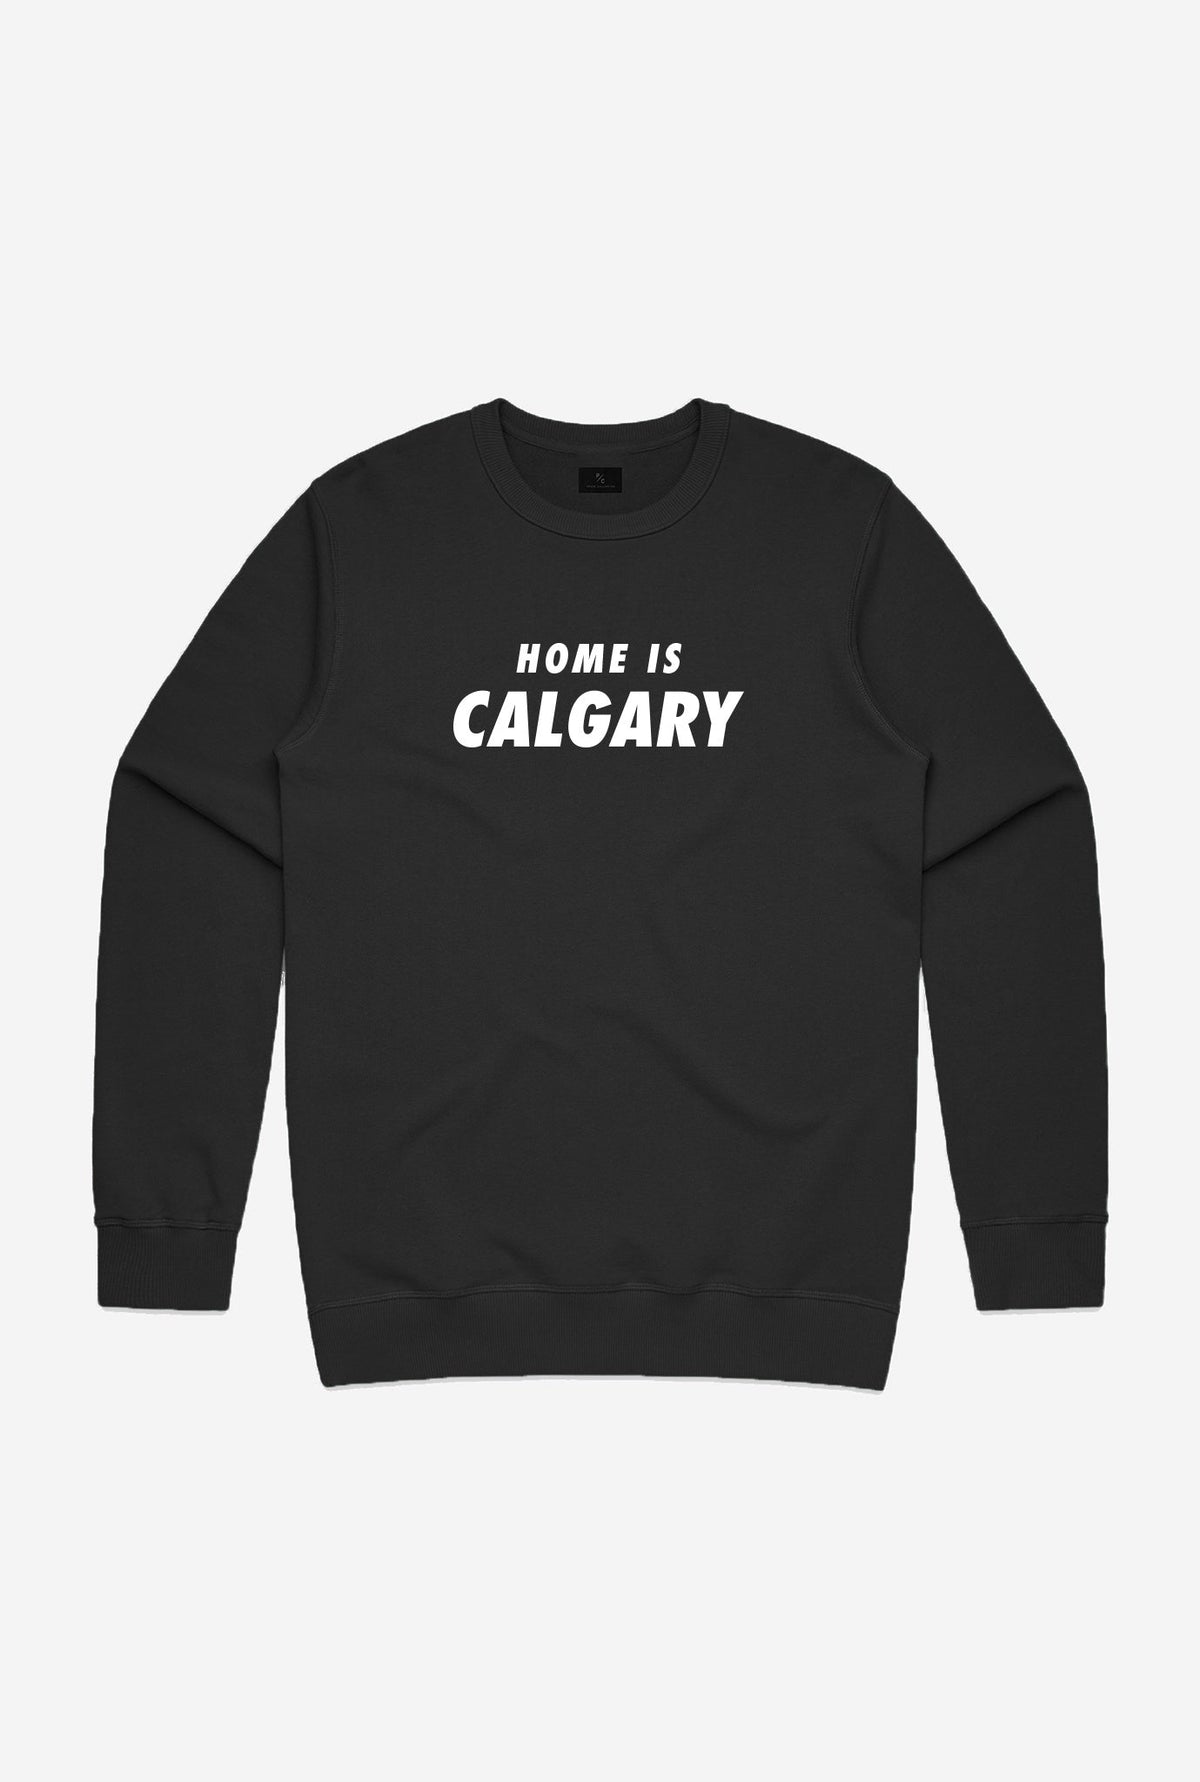 Home is Calgary Crewneck - Black